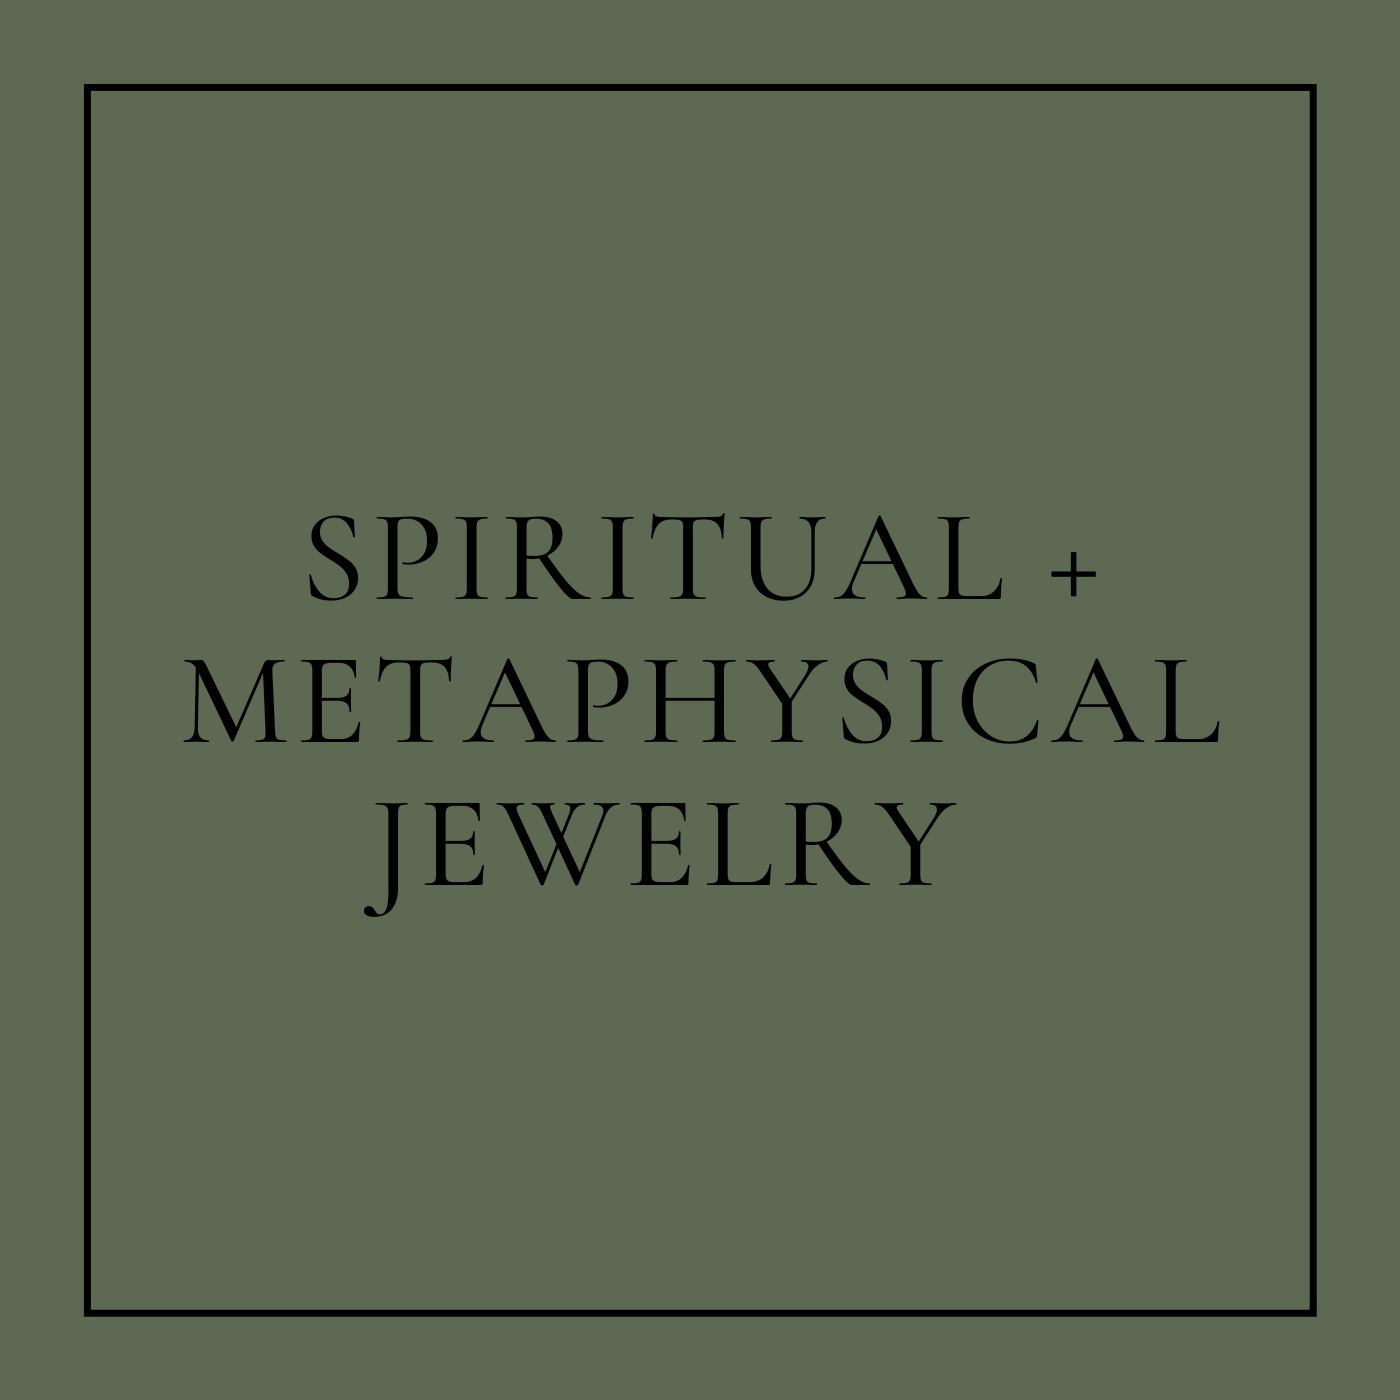 SPIRITUAL + METAPHYSICAL JEWELRY